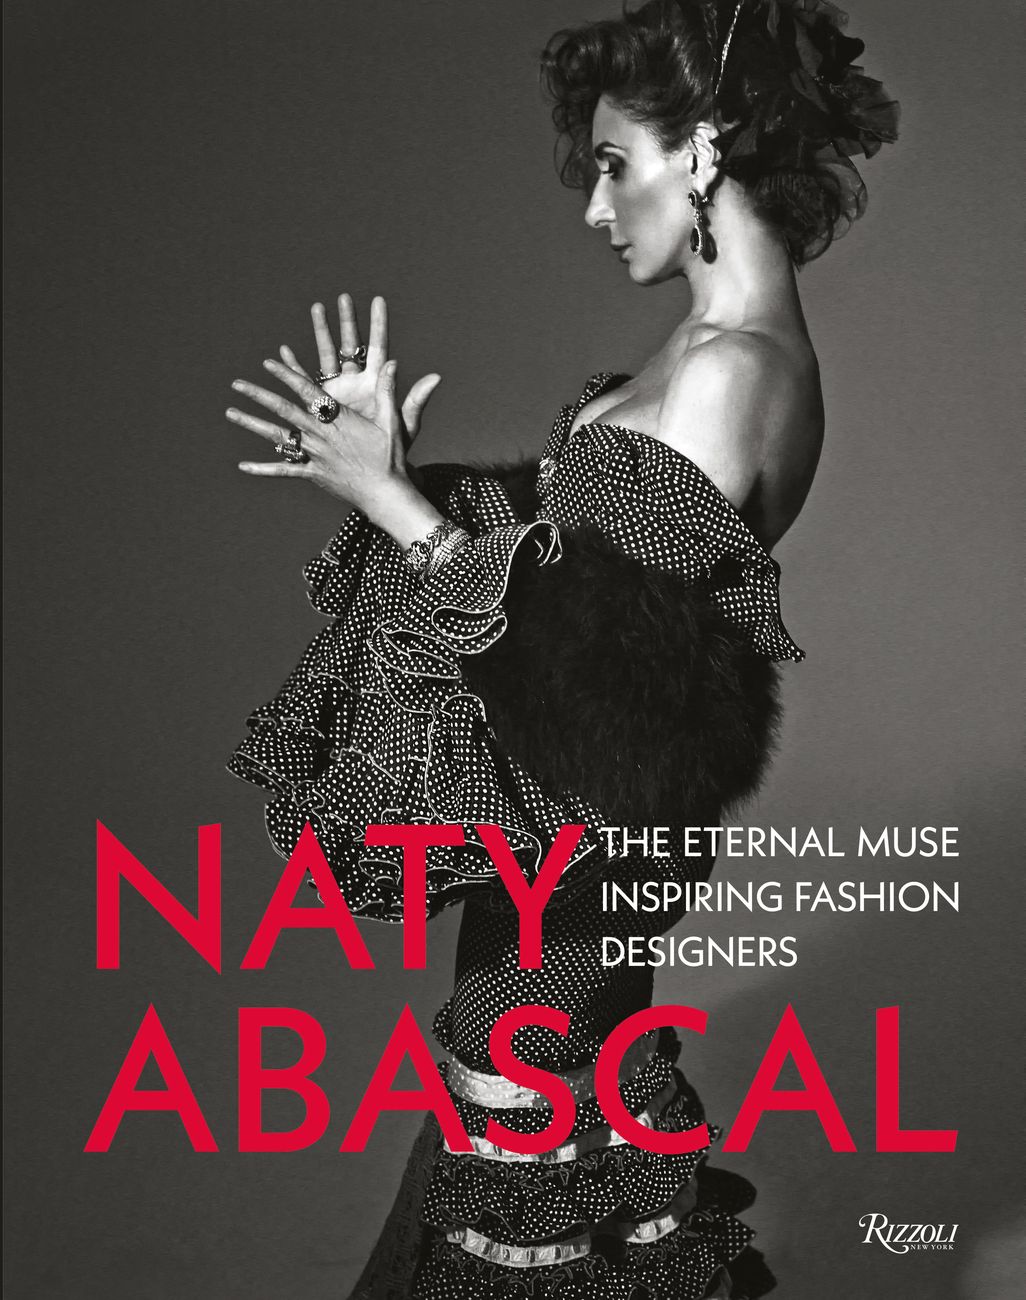 Naty Abascal. The international muse inspiring fashion designers (Rizzoli, New York 2021)